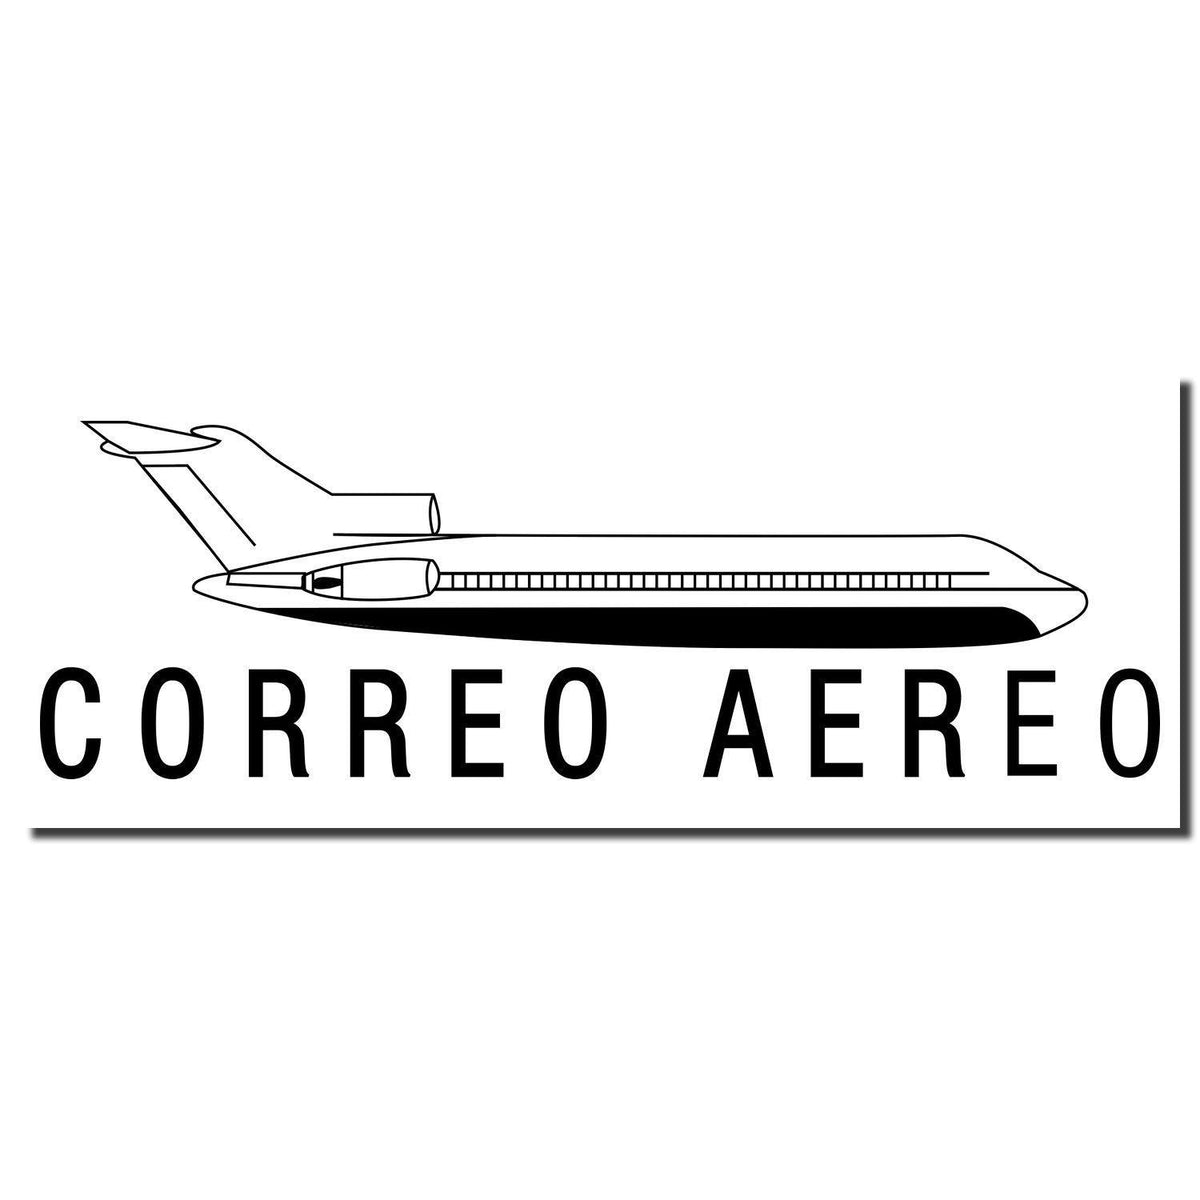 Enlarged Imprint Correo Aero Rubber Stamp Sample